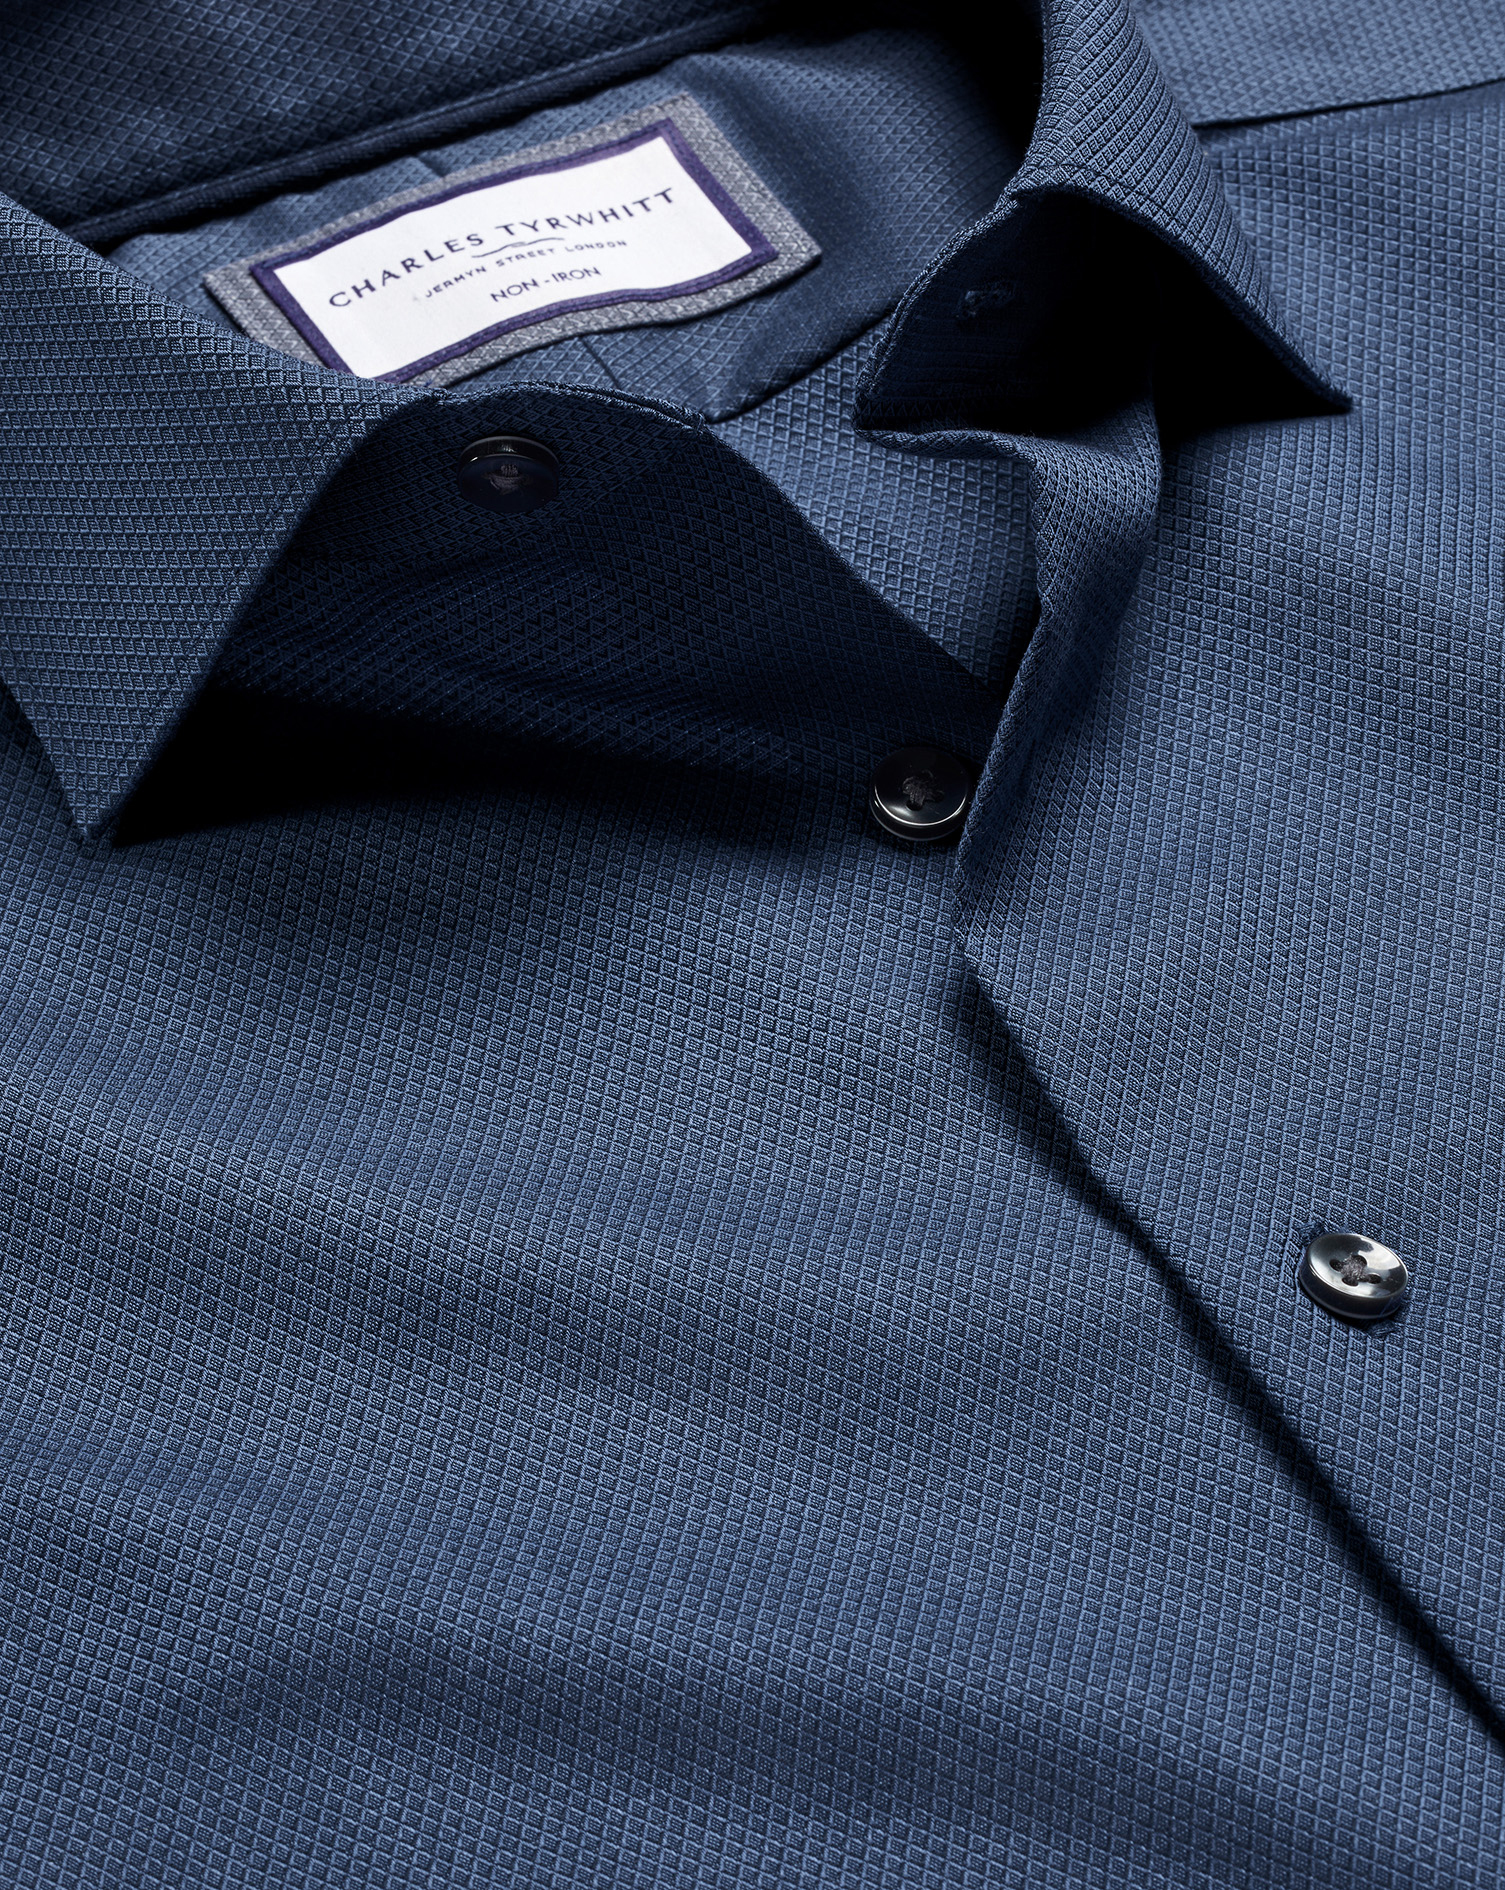 Men's Charles Tyrwhitt Non-Iron Diamond Stretch Texture Dress Shirt - Denim Blue Single Cuff Size 16